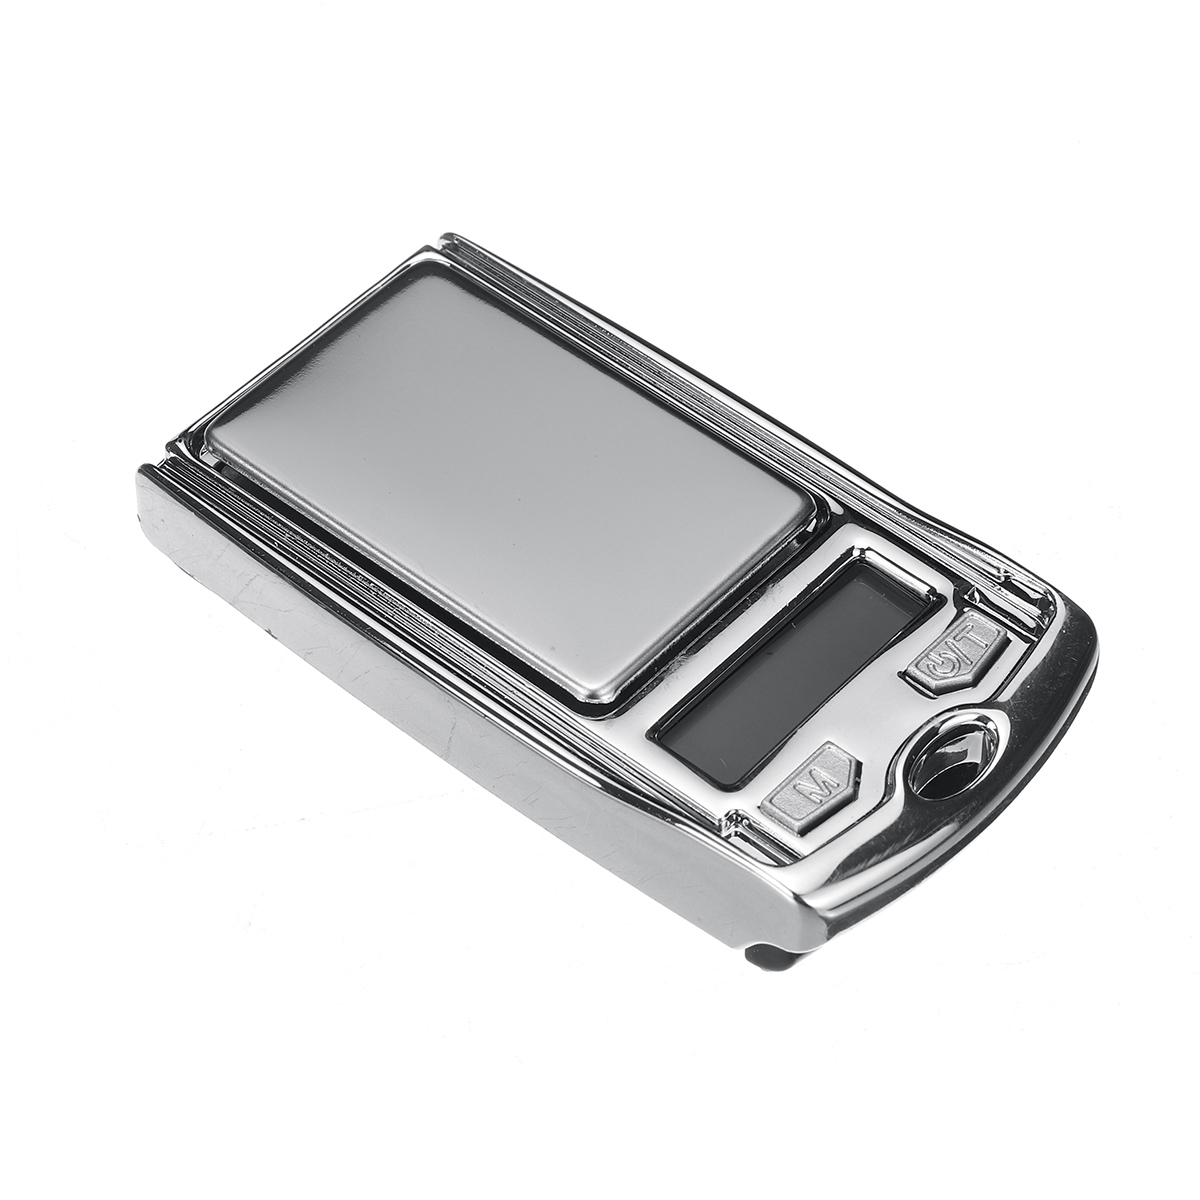 Car-Key-Portable-Digital-Pocket-Scale-001g-100g-Mini-Silver-Jewelry-Weighing-1691985-2